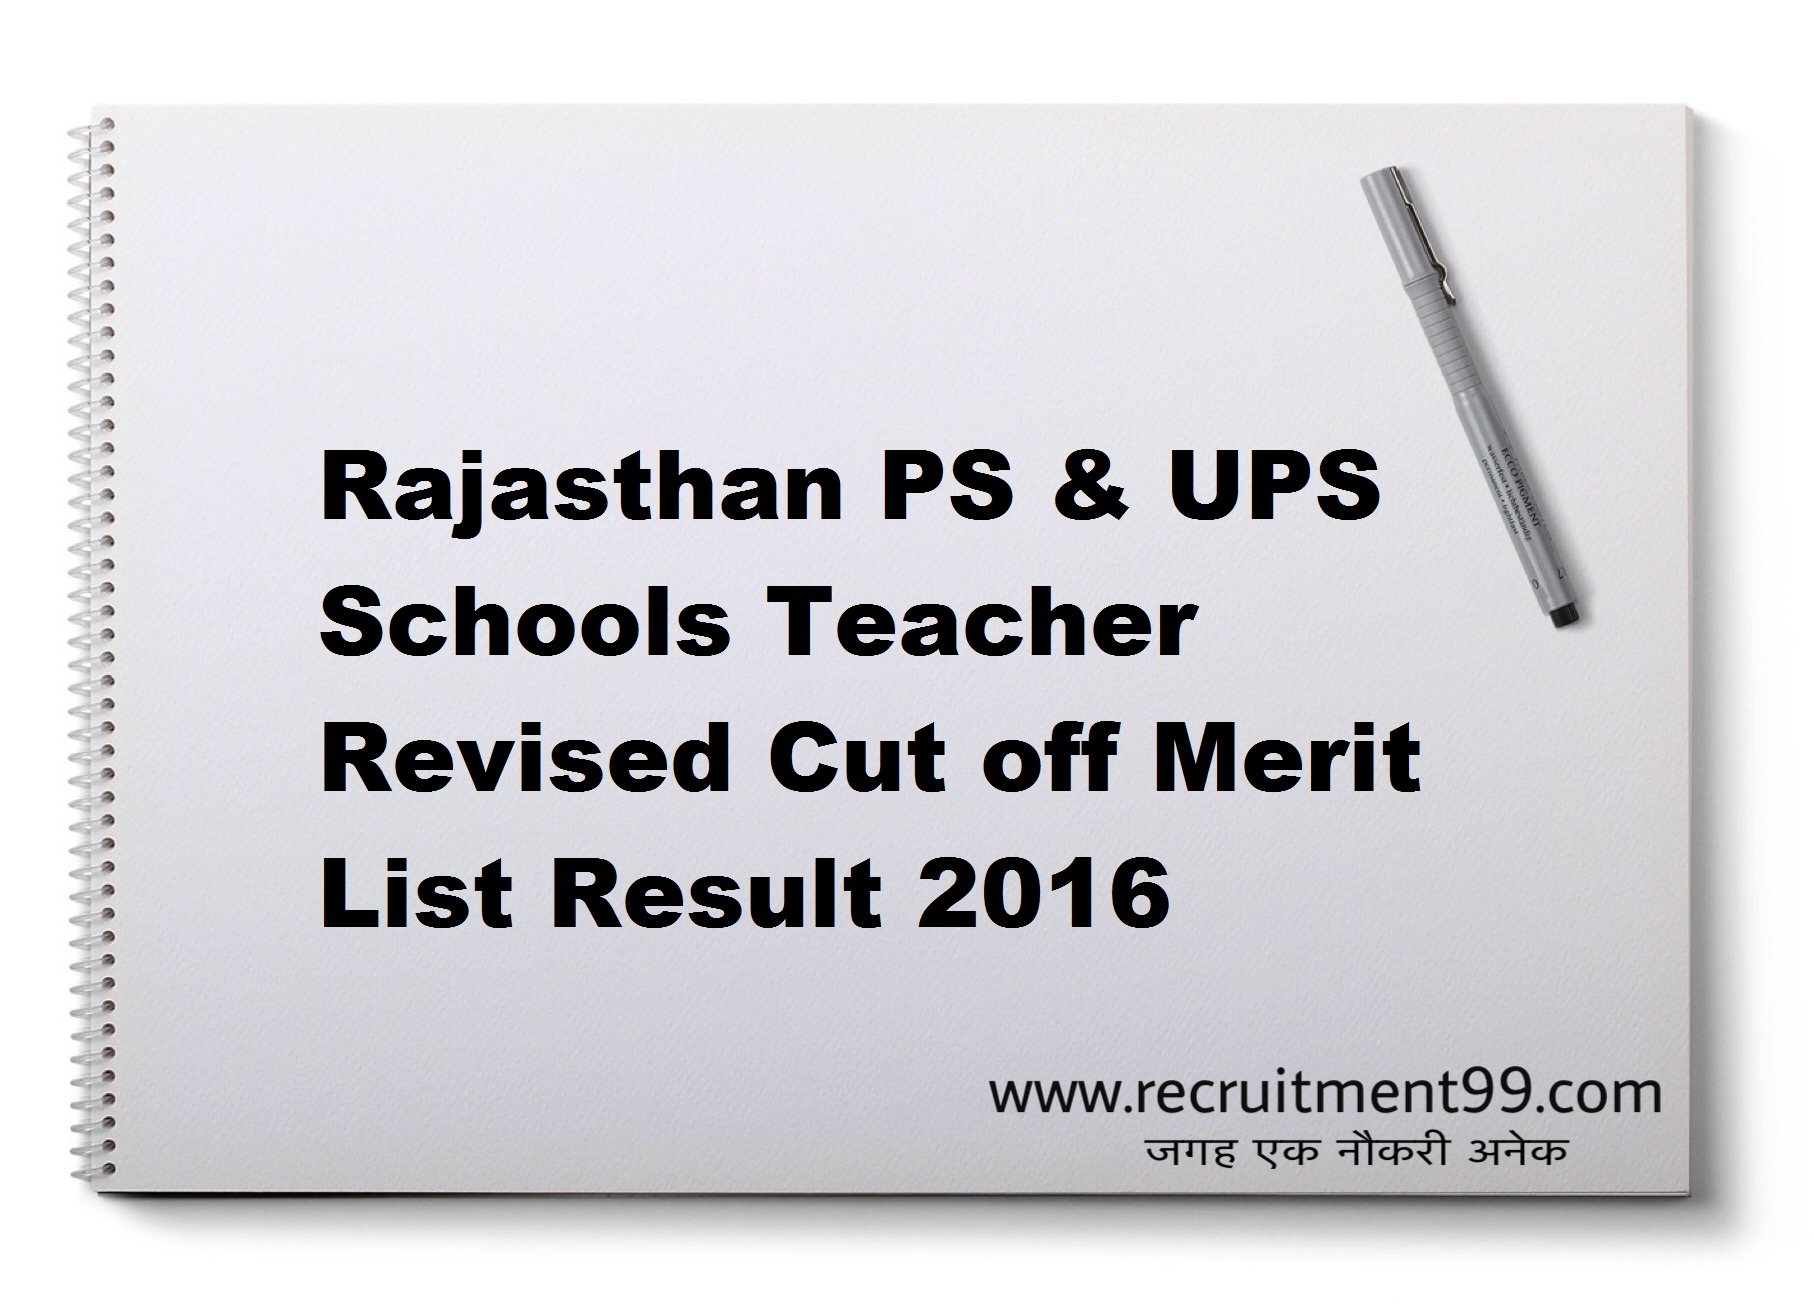 Rajasthan PS & UPS Schools Teacher Revised Cut off Merit List Result 2016